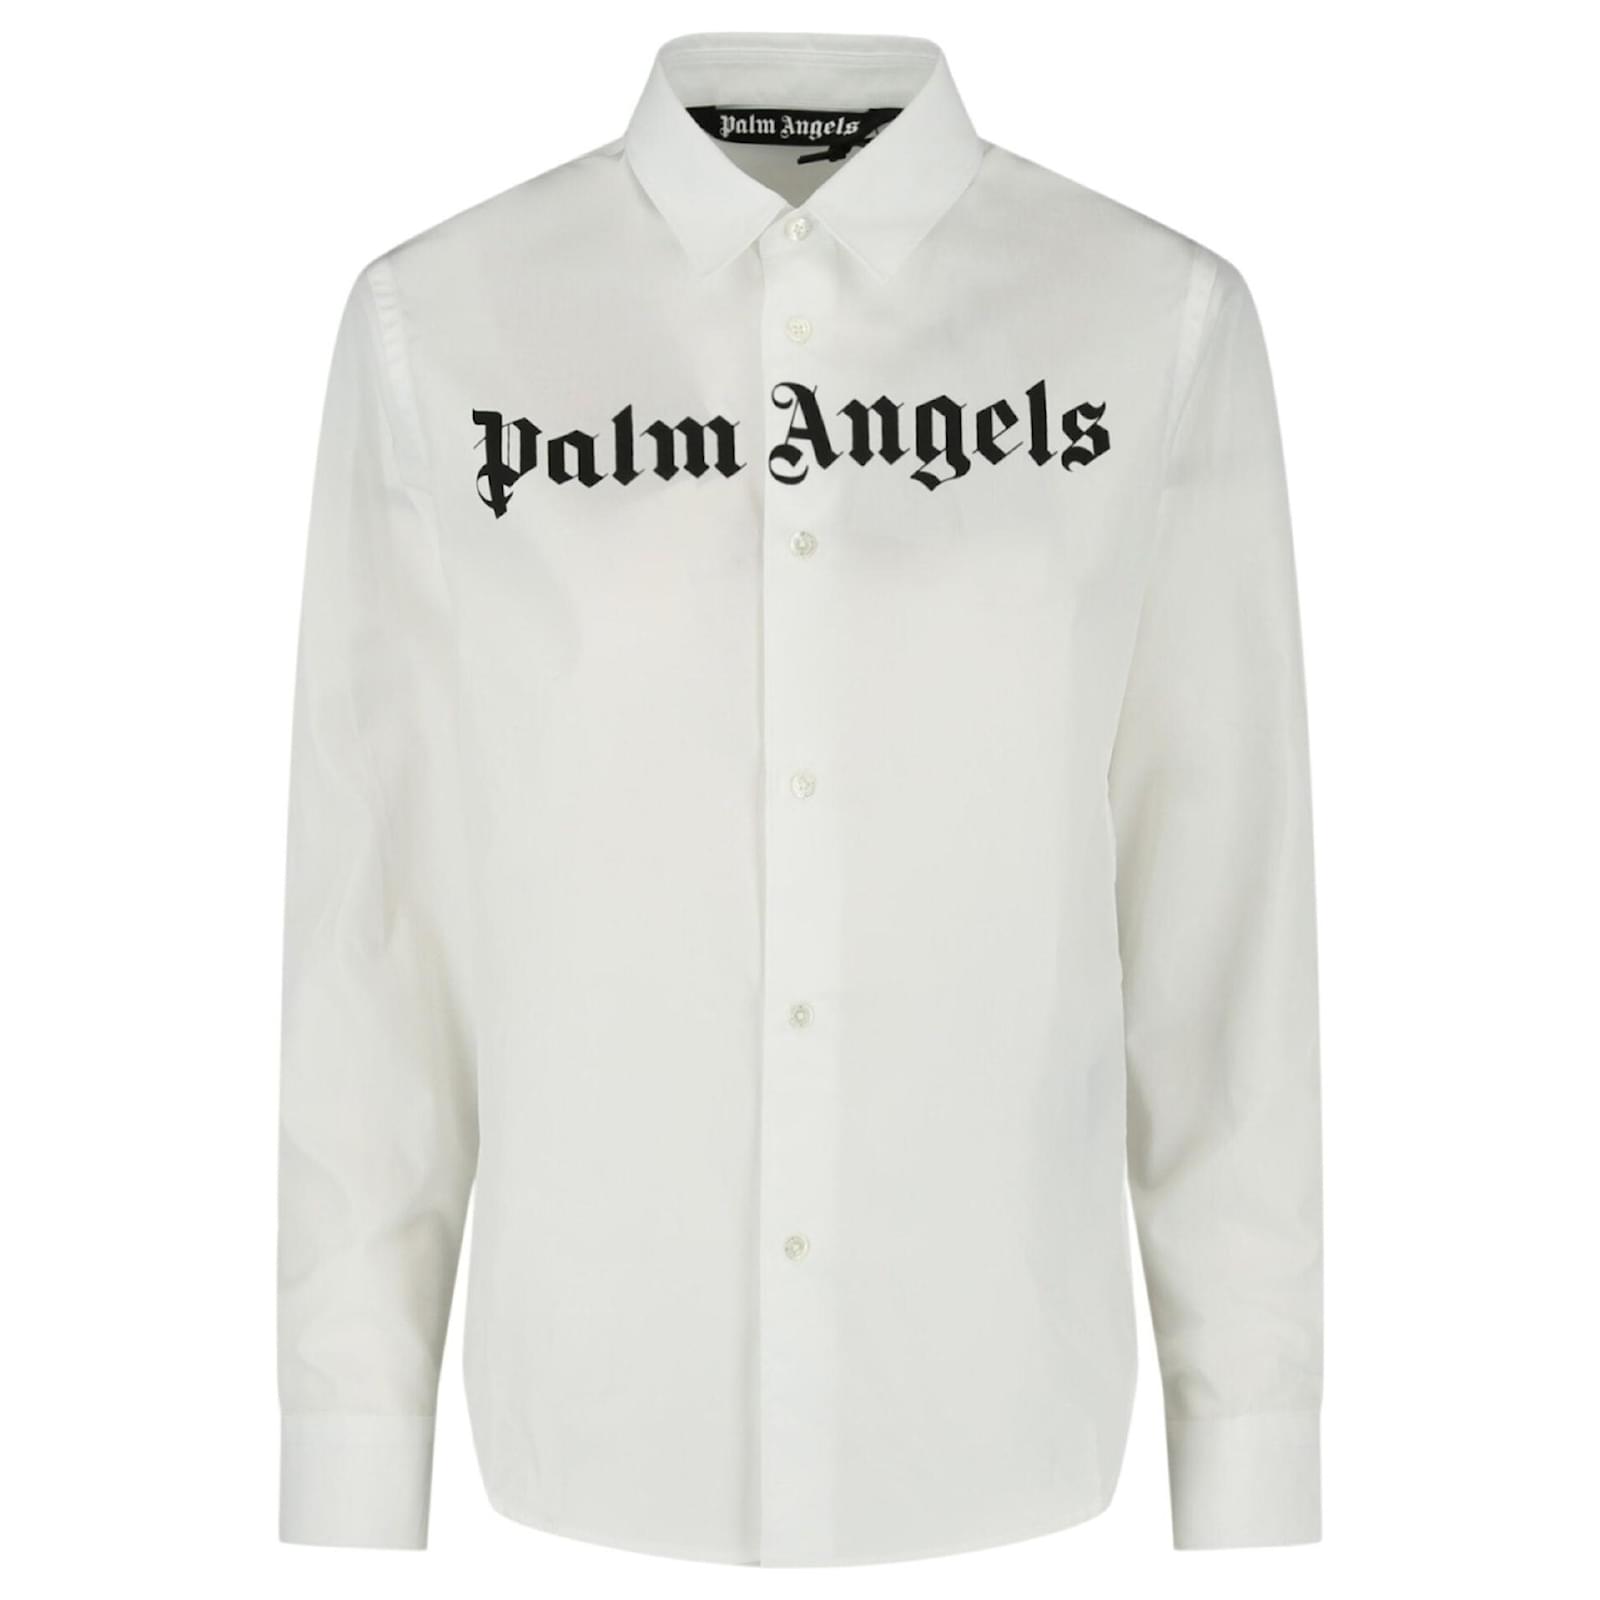 https://cdn1.jolicloset.com/imgr/full/2023/02/796613-1/branco-algodao-camisa-de-gola-com-logo-palm-angels-camisetas.jpg